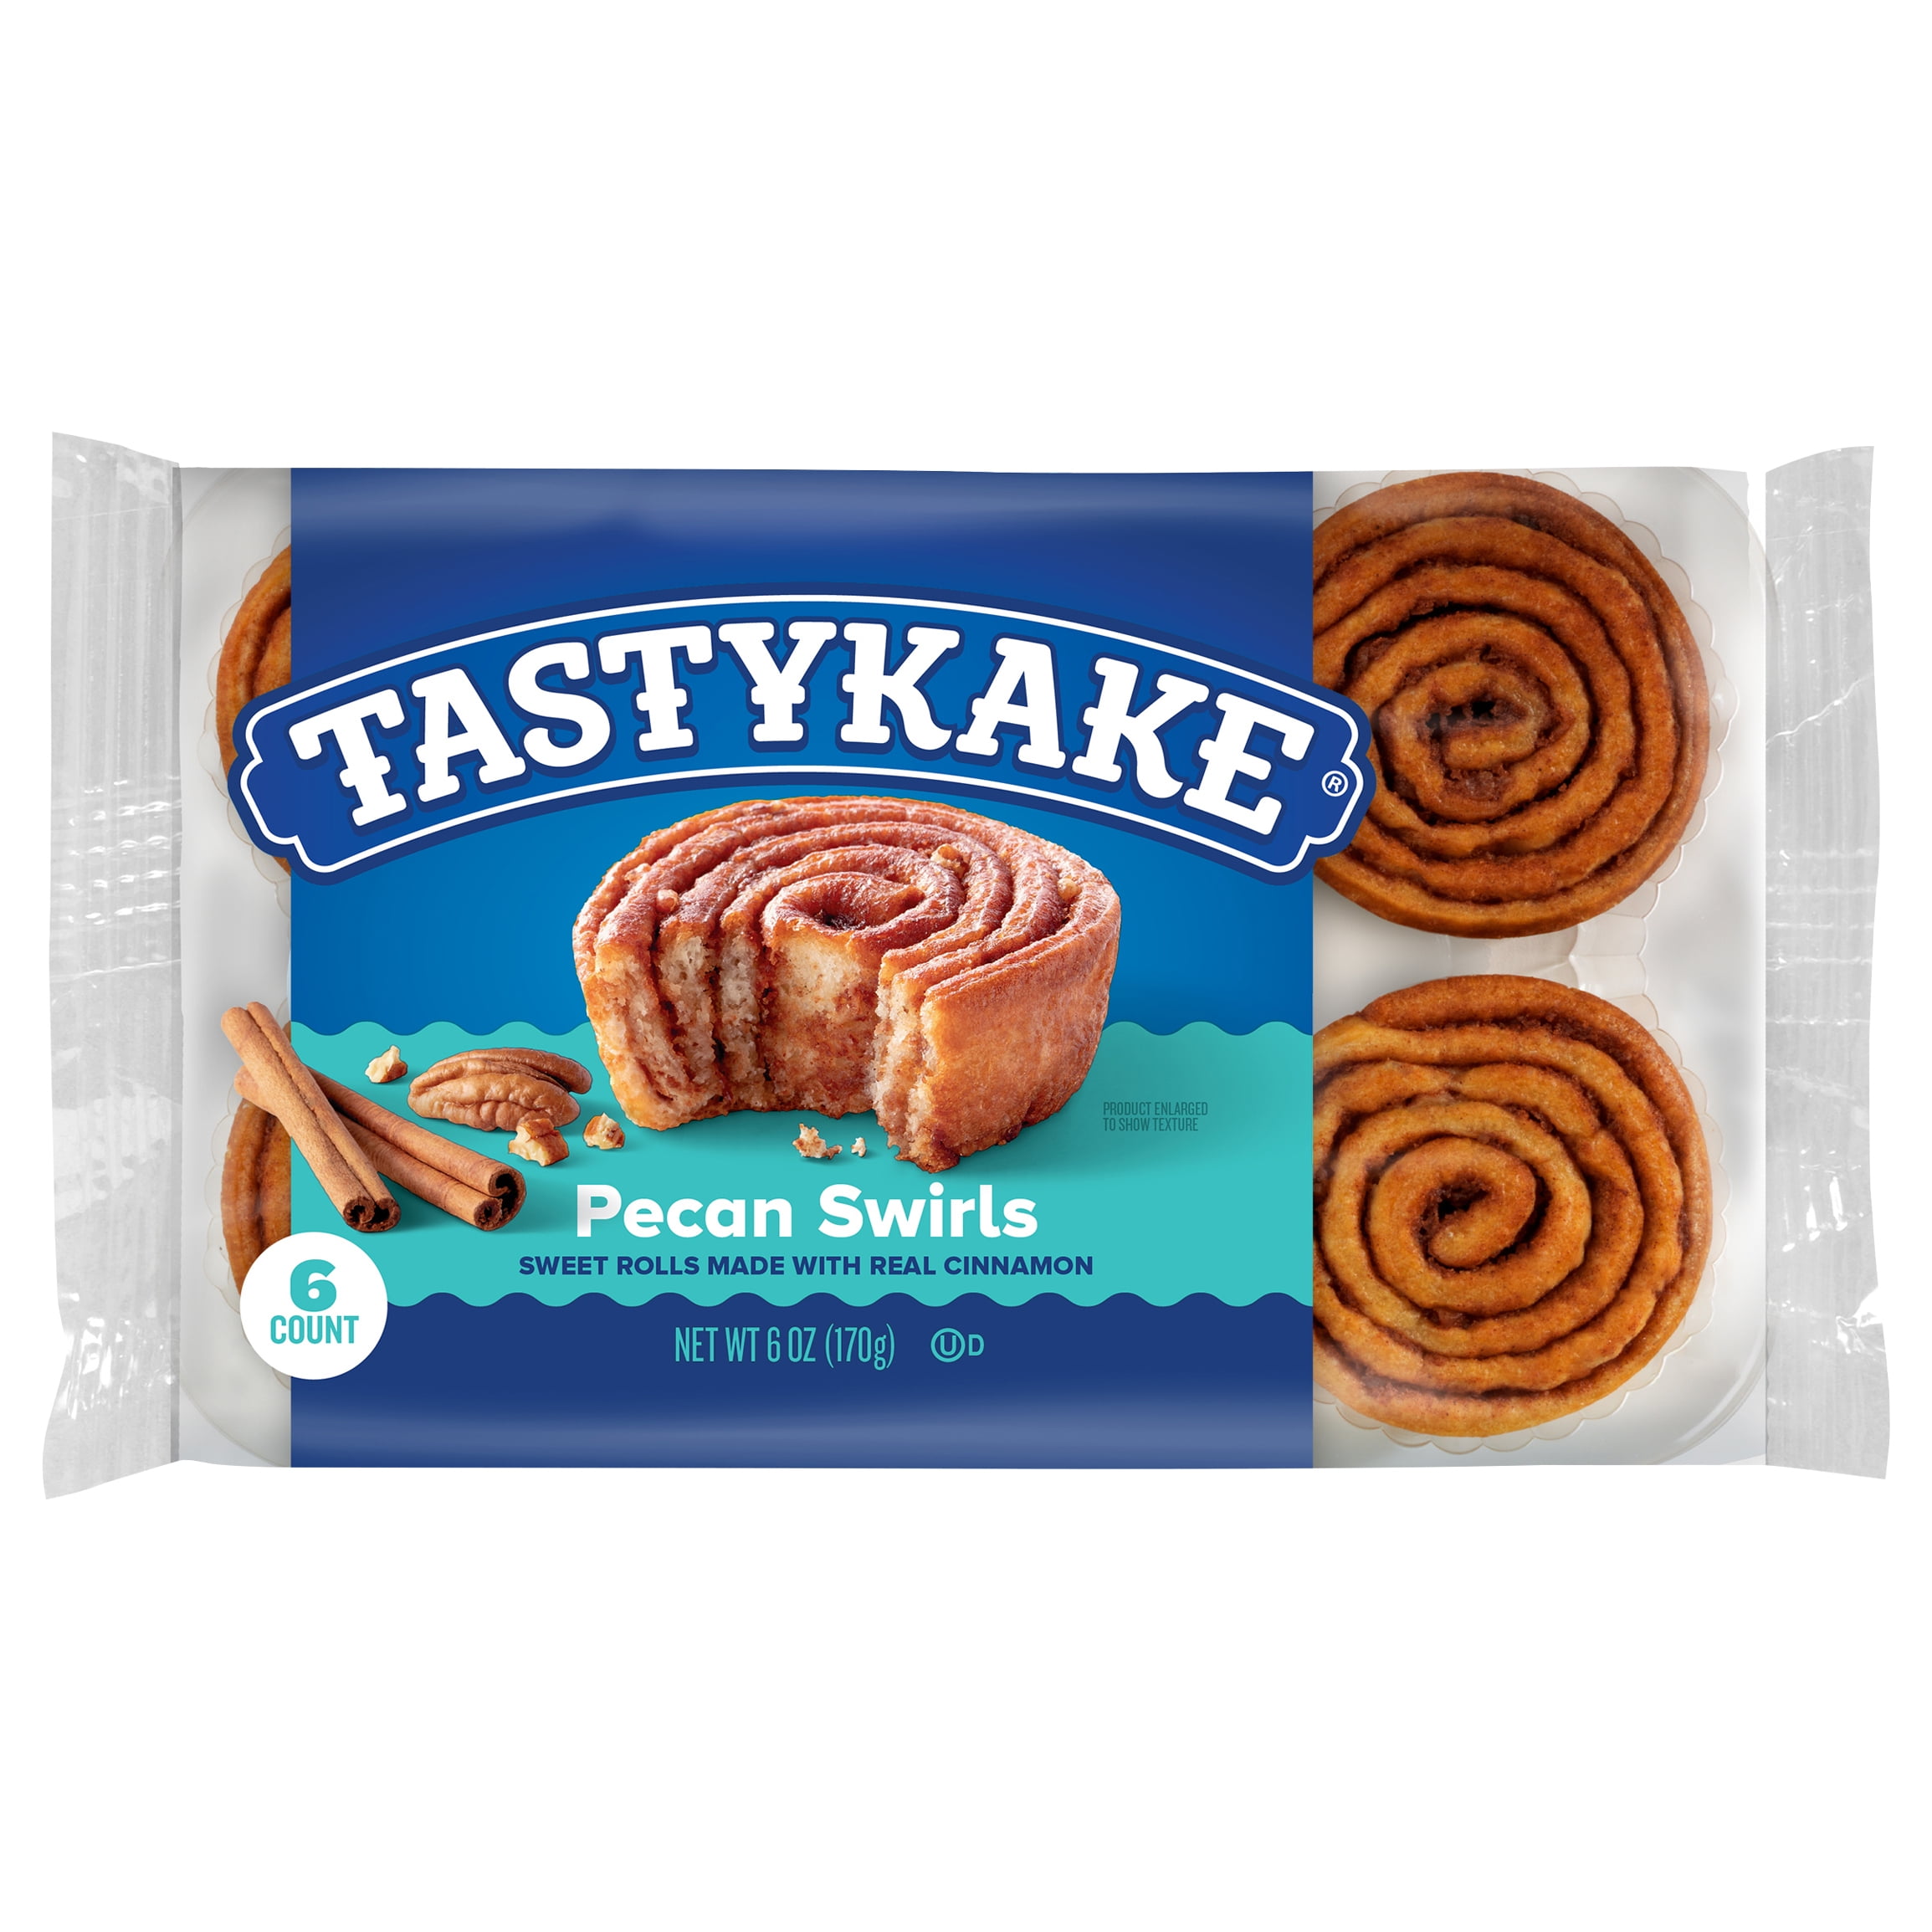 Tastykake Pecan Swirls, Cinnamon and Pecan Filled Pastry Rolls, 6 oz, 6 Count